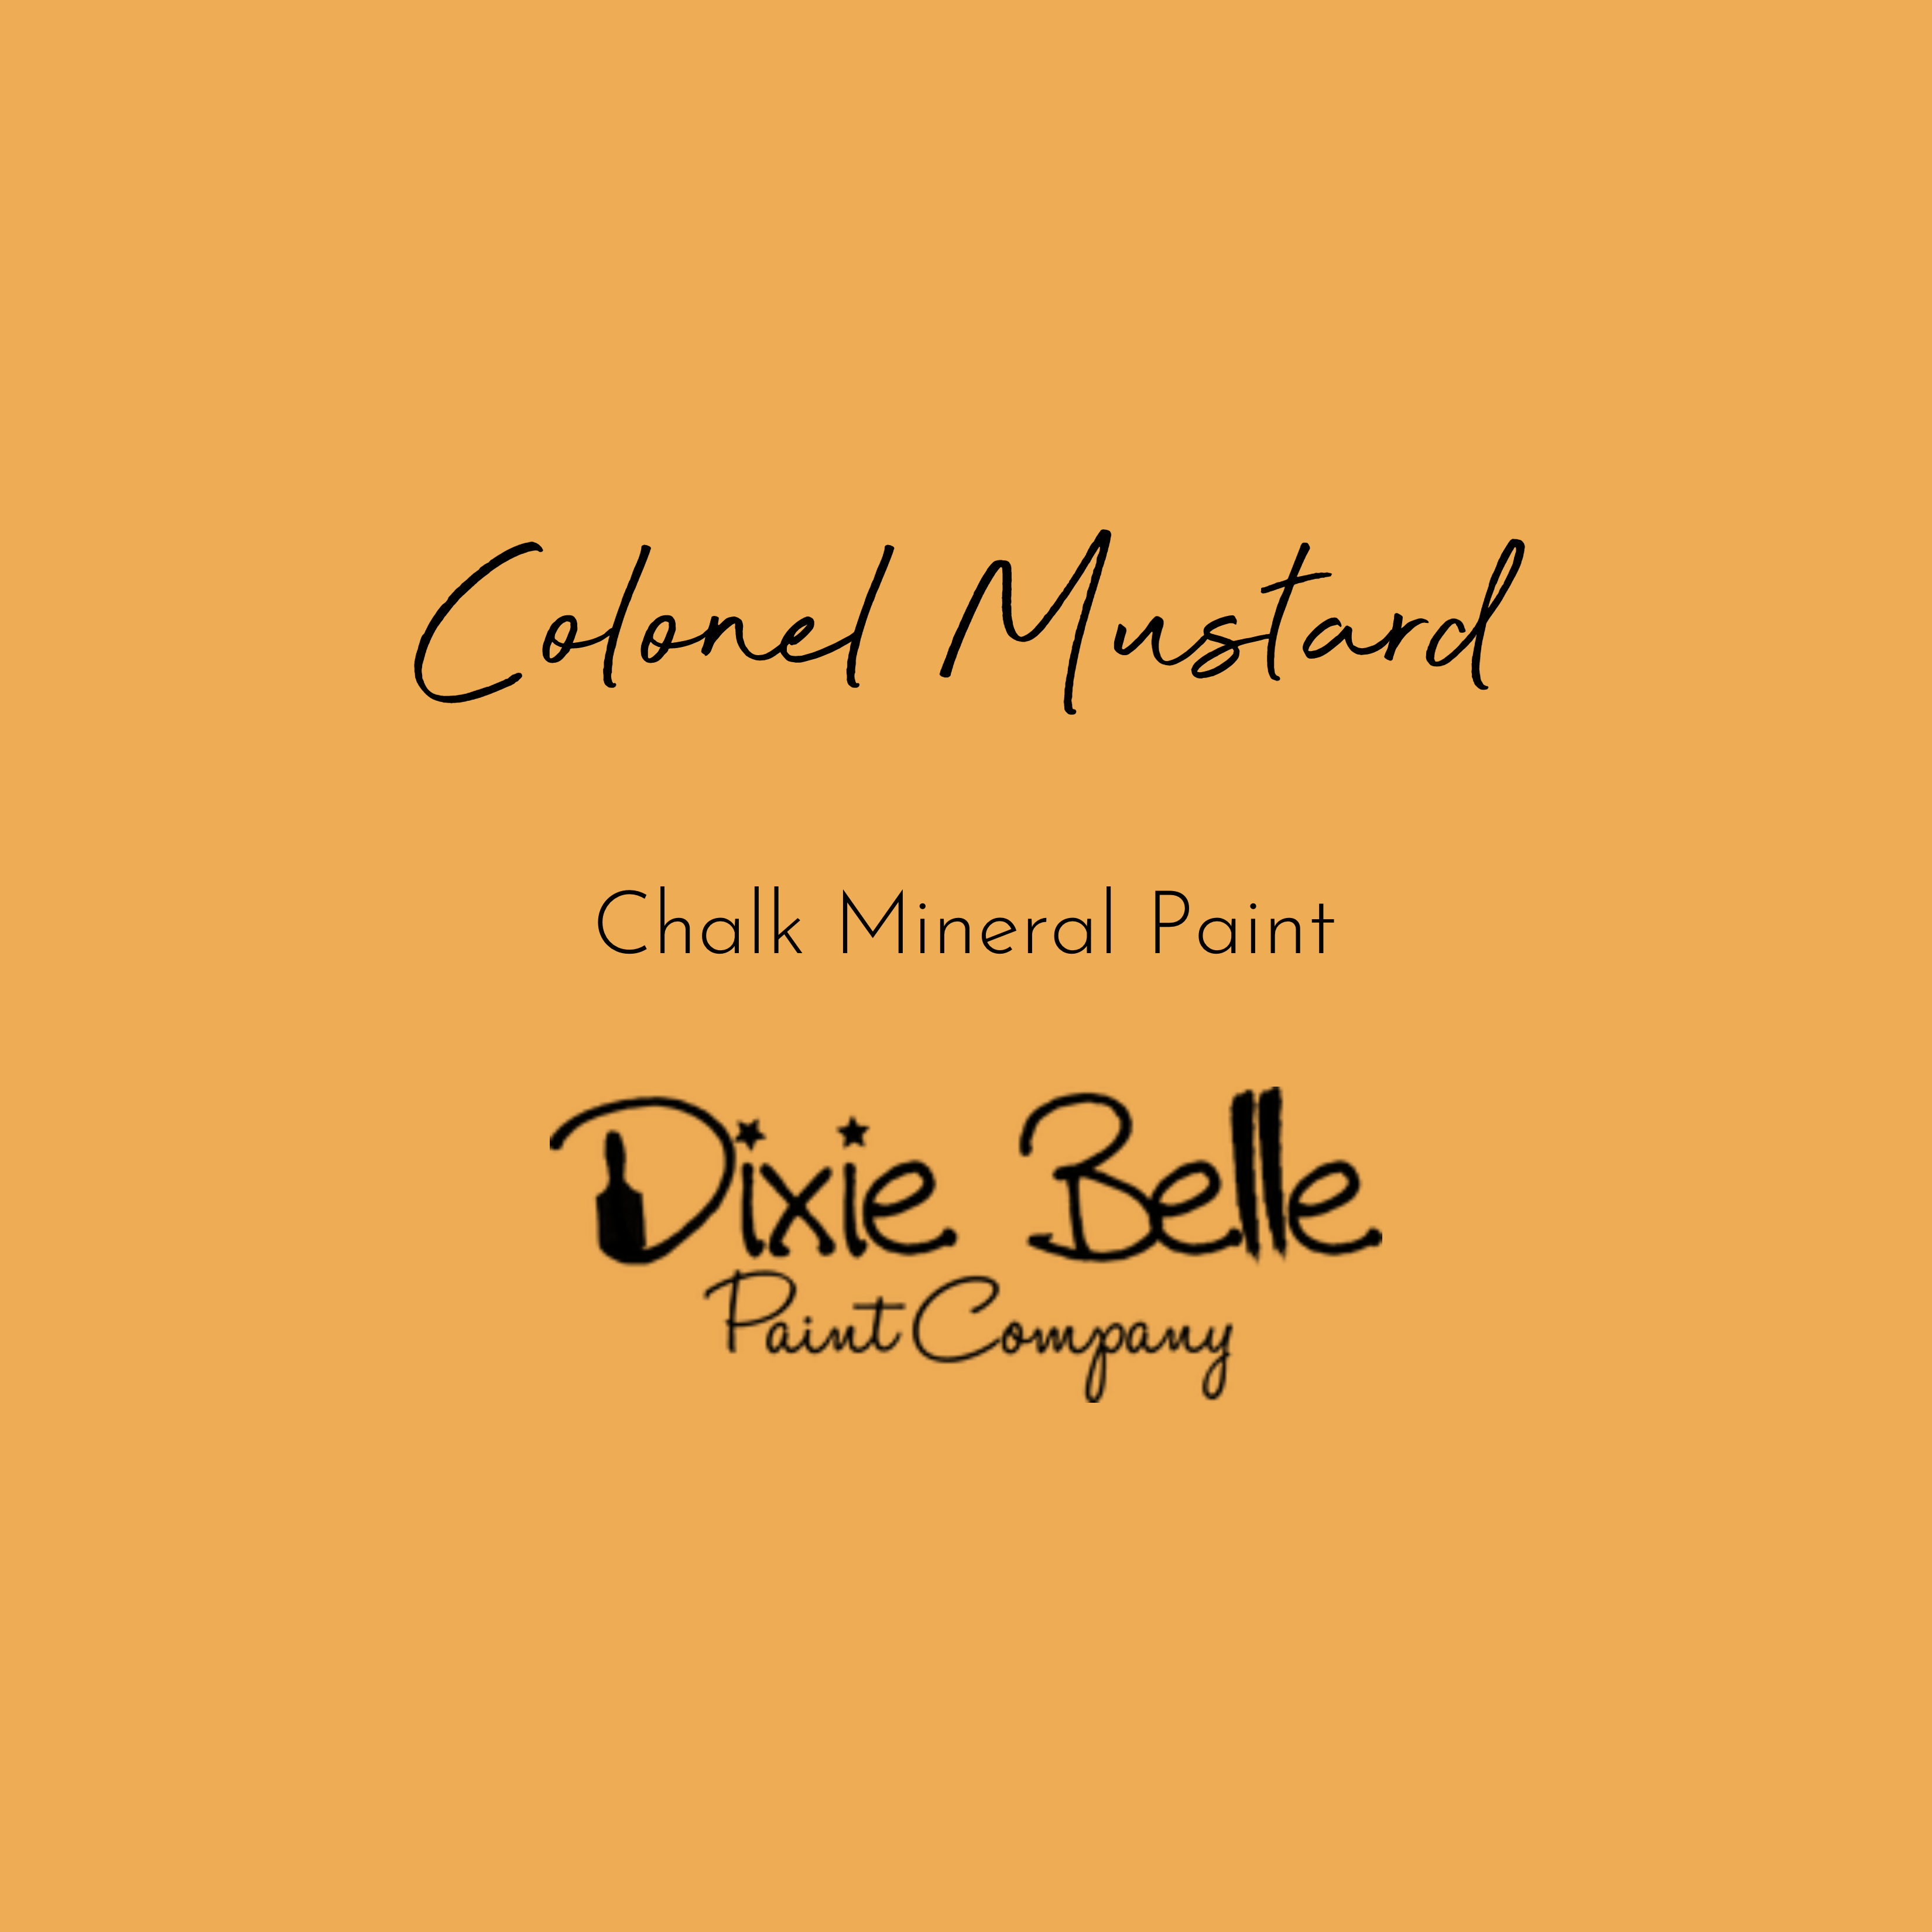 Colonel Mustard Chalk Mineral Paint (16 oz)